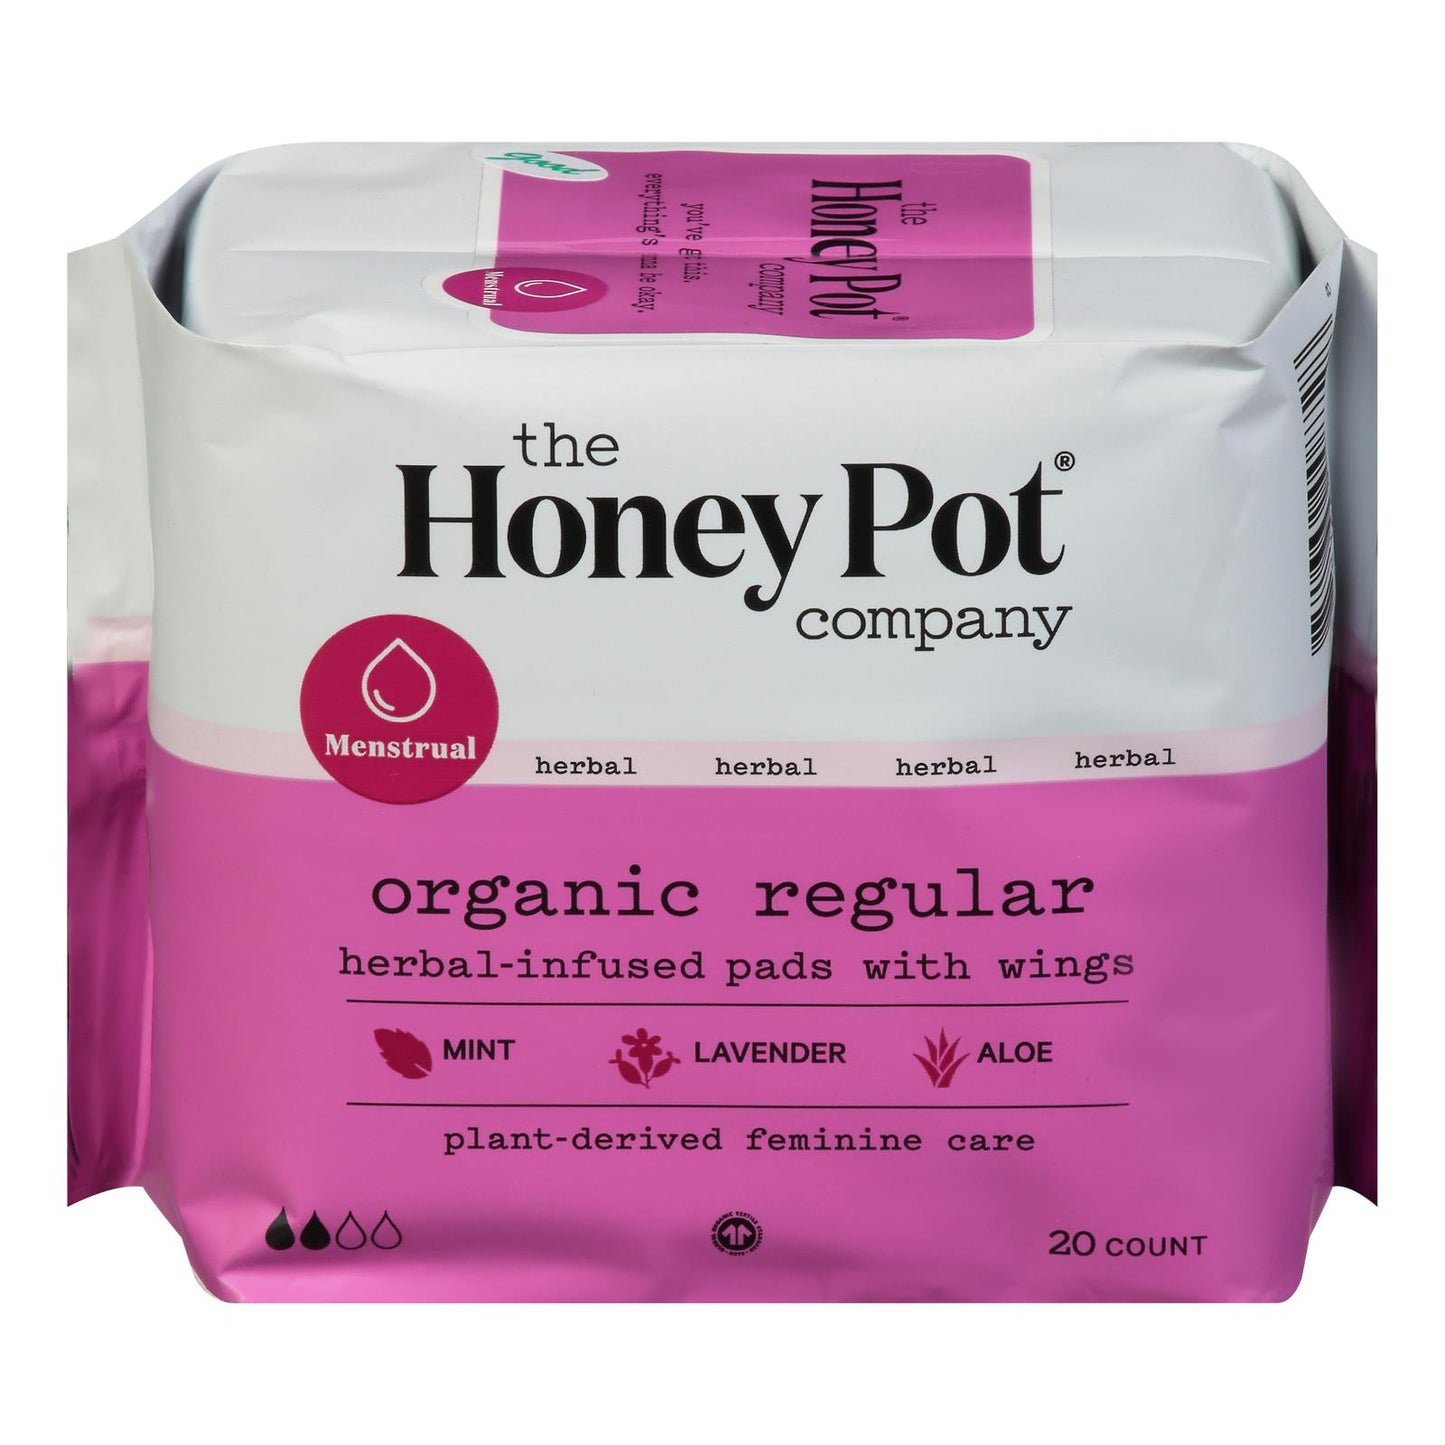 FSA-Approved The Honey Pot - Menstrual Pads Regular Herbal, 20 ct – BuyFSA